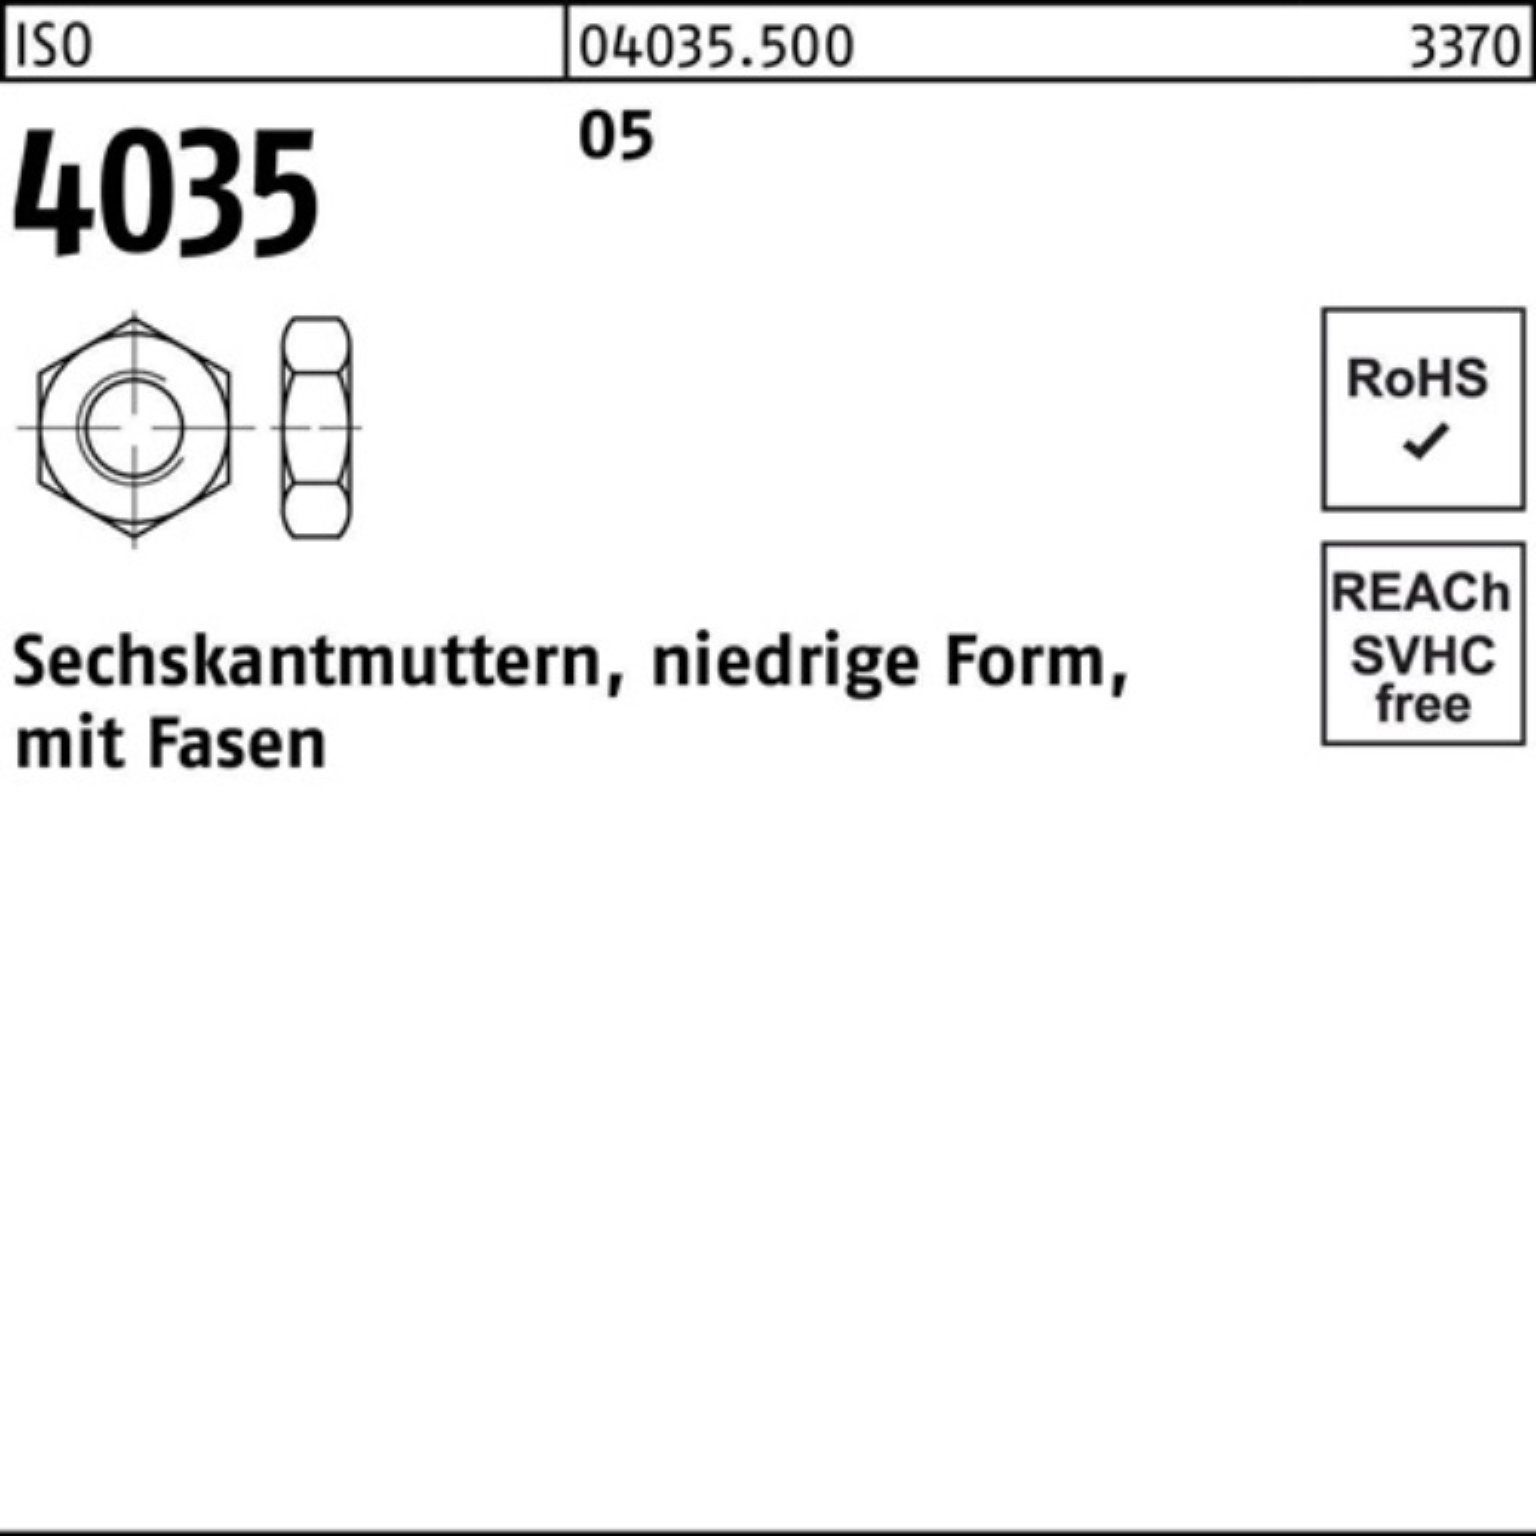 Fasen 100 Sechskantmutter niedrig M12 Pack 4035 Reyher Muttern 100er 5 ISO ISO Stück